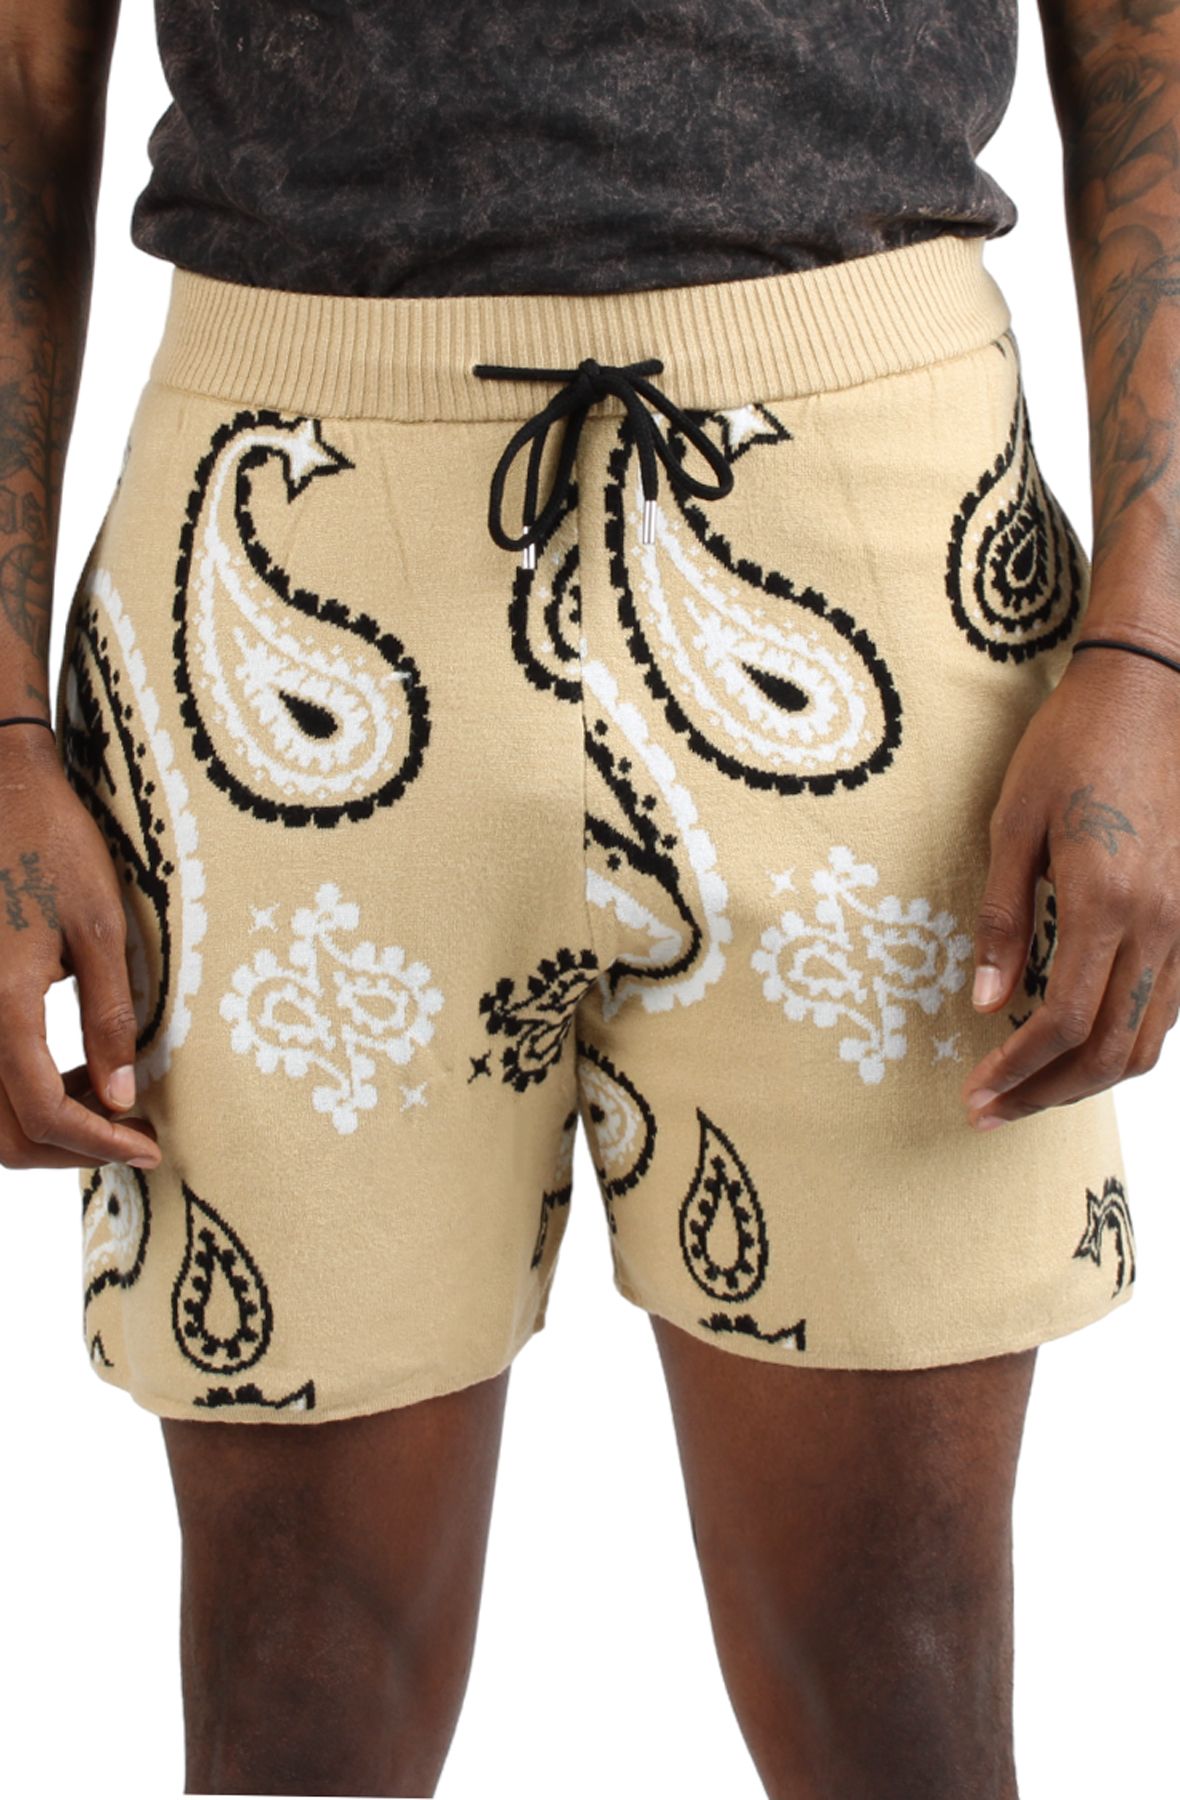 True Religion Men's Bandana Shorts, Porcini Paisley, Small at  Men's  Clothing store